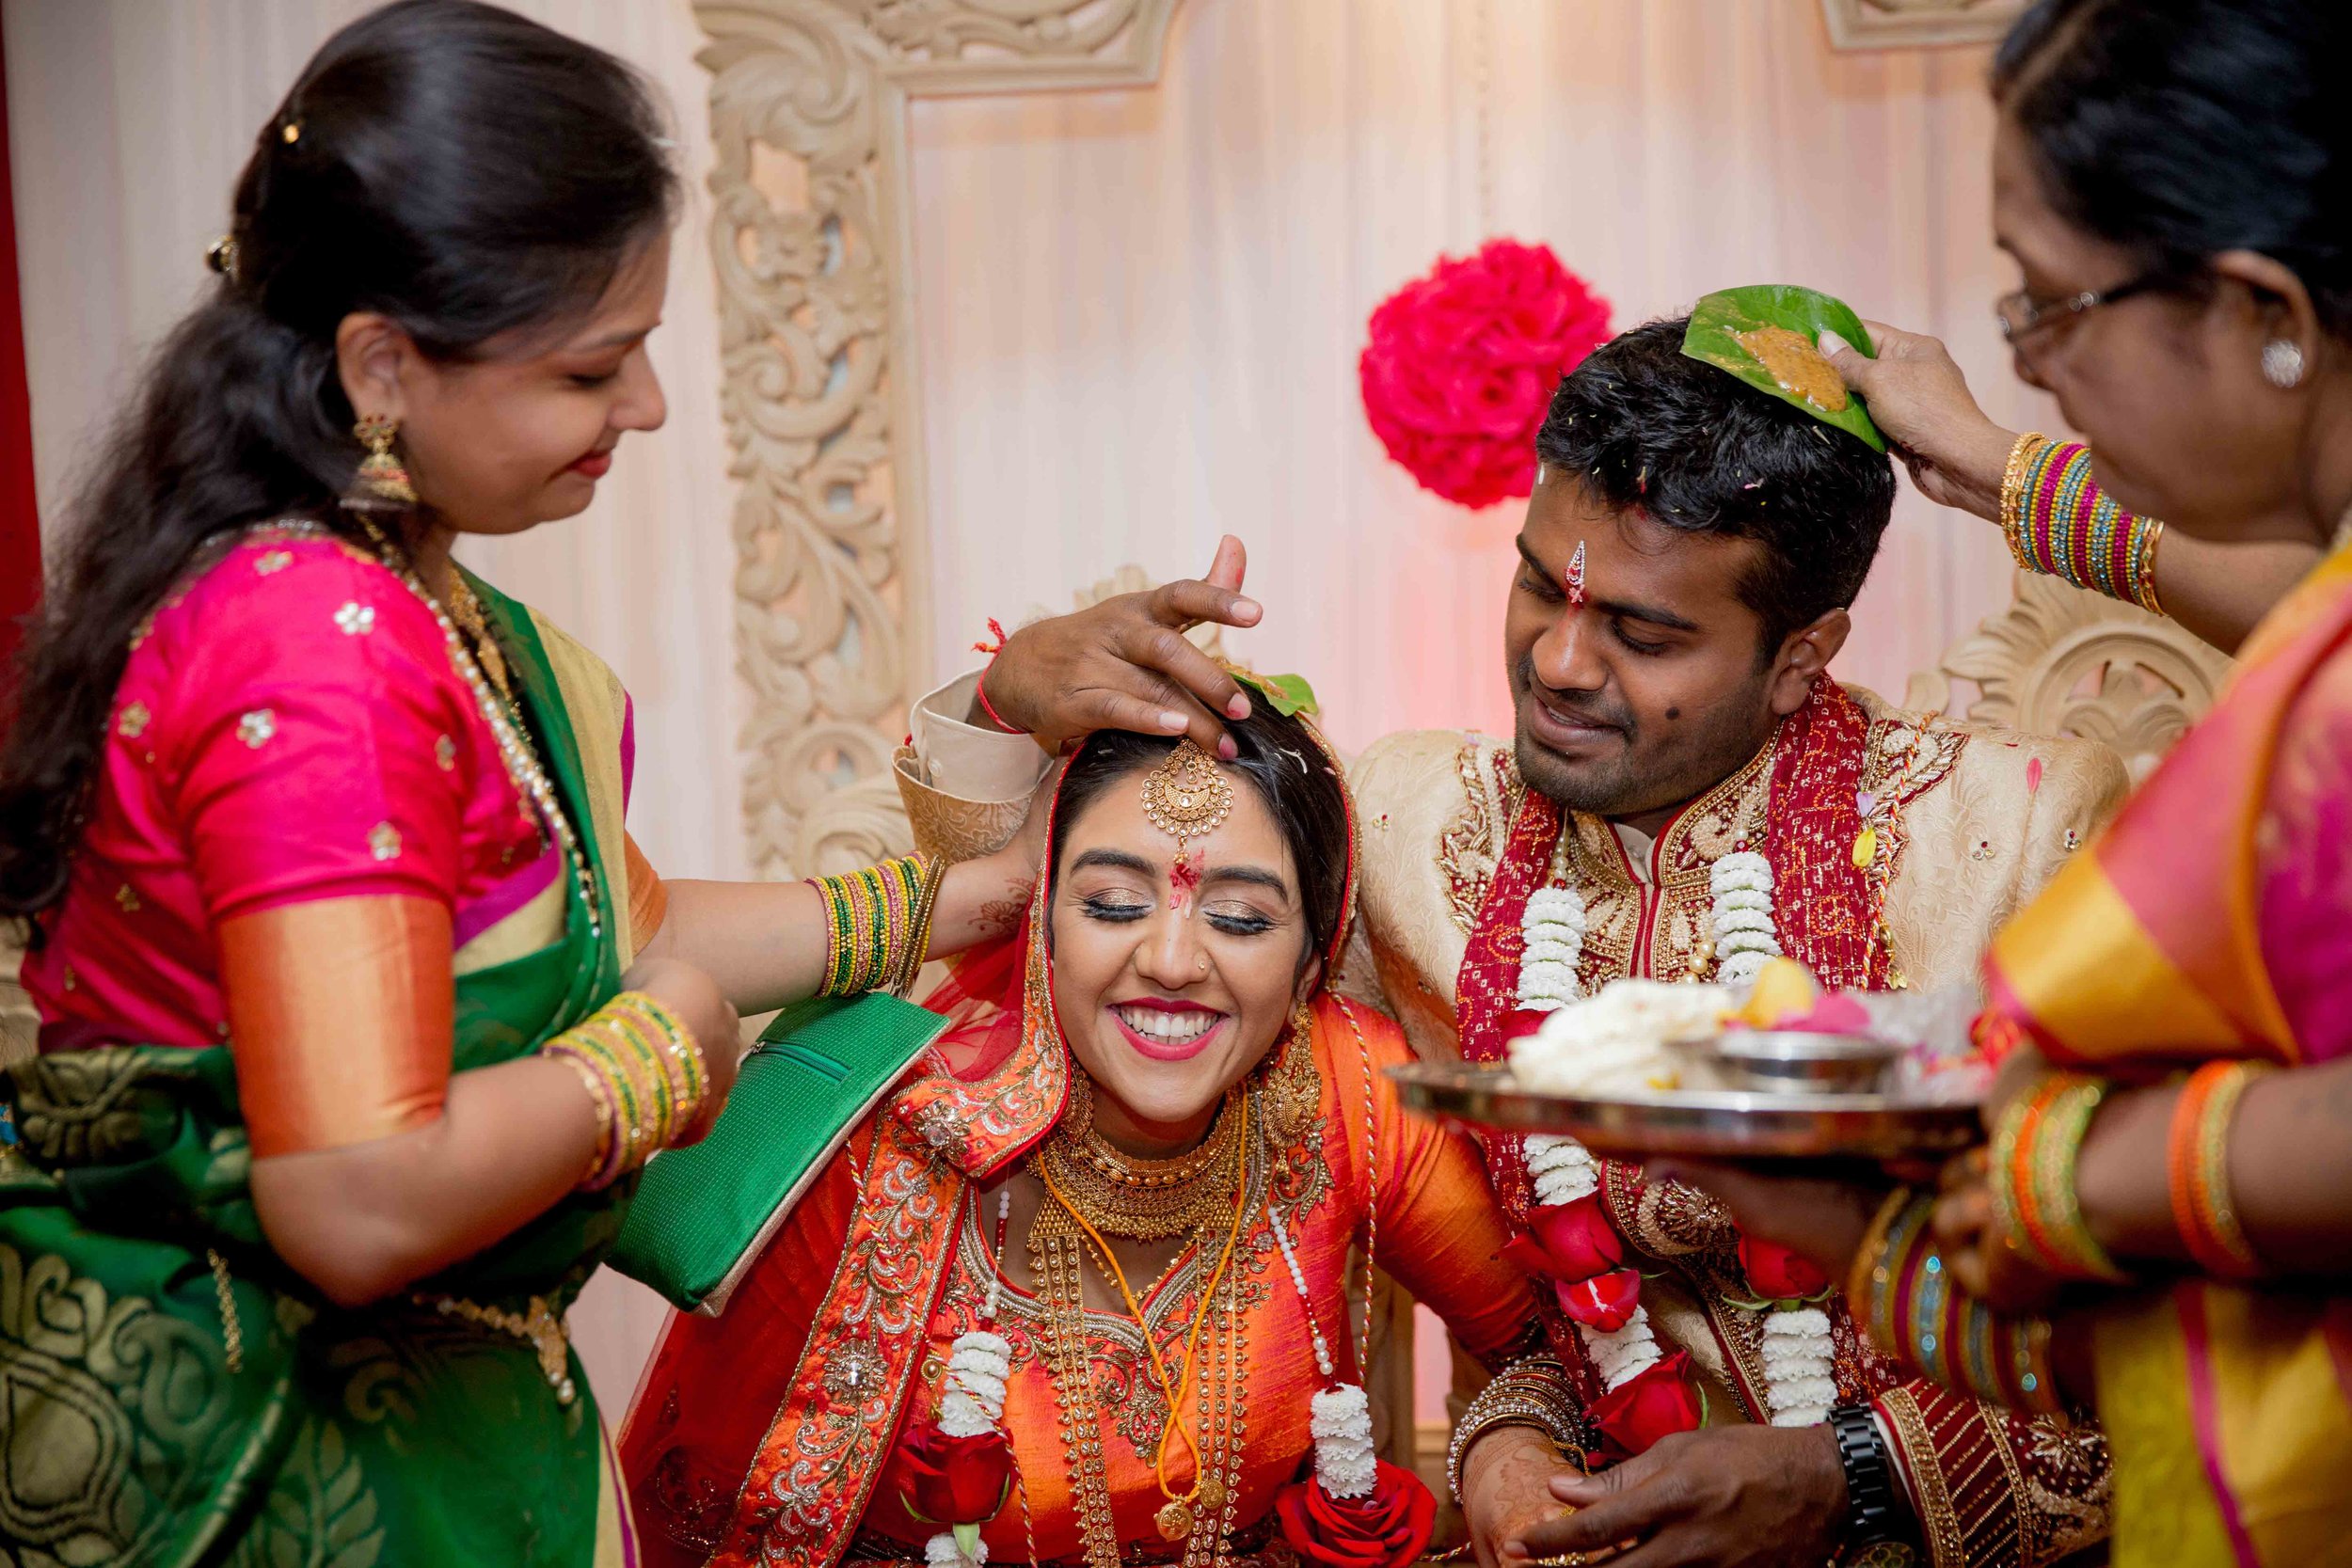 premier-banquetting-london-Hindu-asian-wedding-photographer-natalia-smith-photography-34.jpg